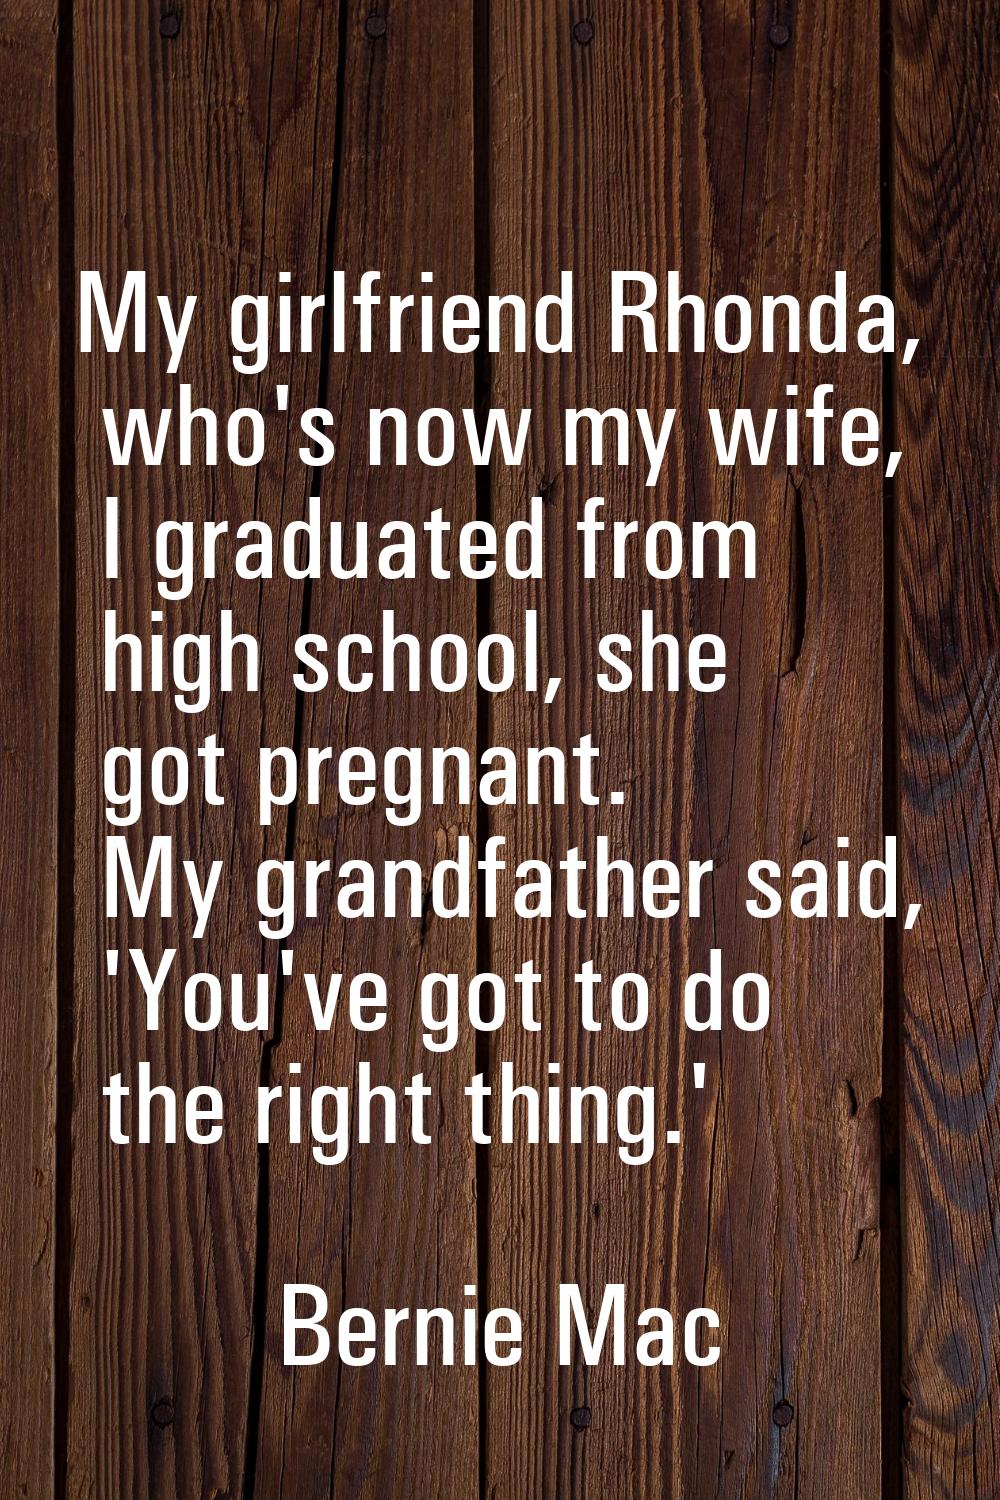 My girlfriend Rhonda, who's now my wife, I graduated from high school, she got pregnant. My grandfa